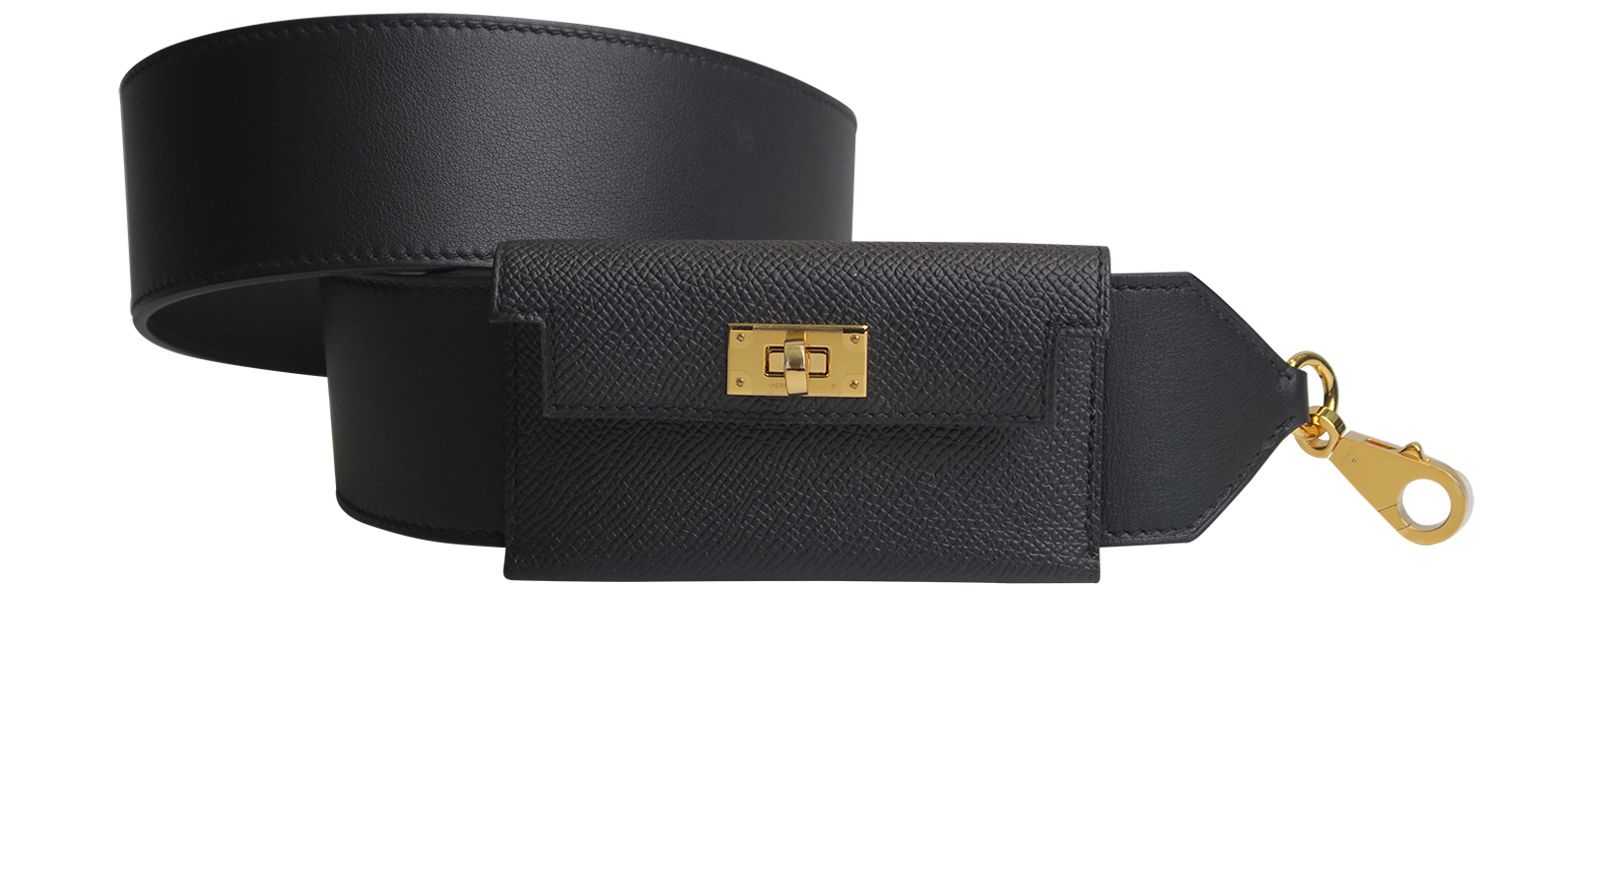 Hermes Kelly Pocket Bag Strap - The Luxury Flavor